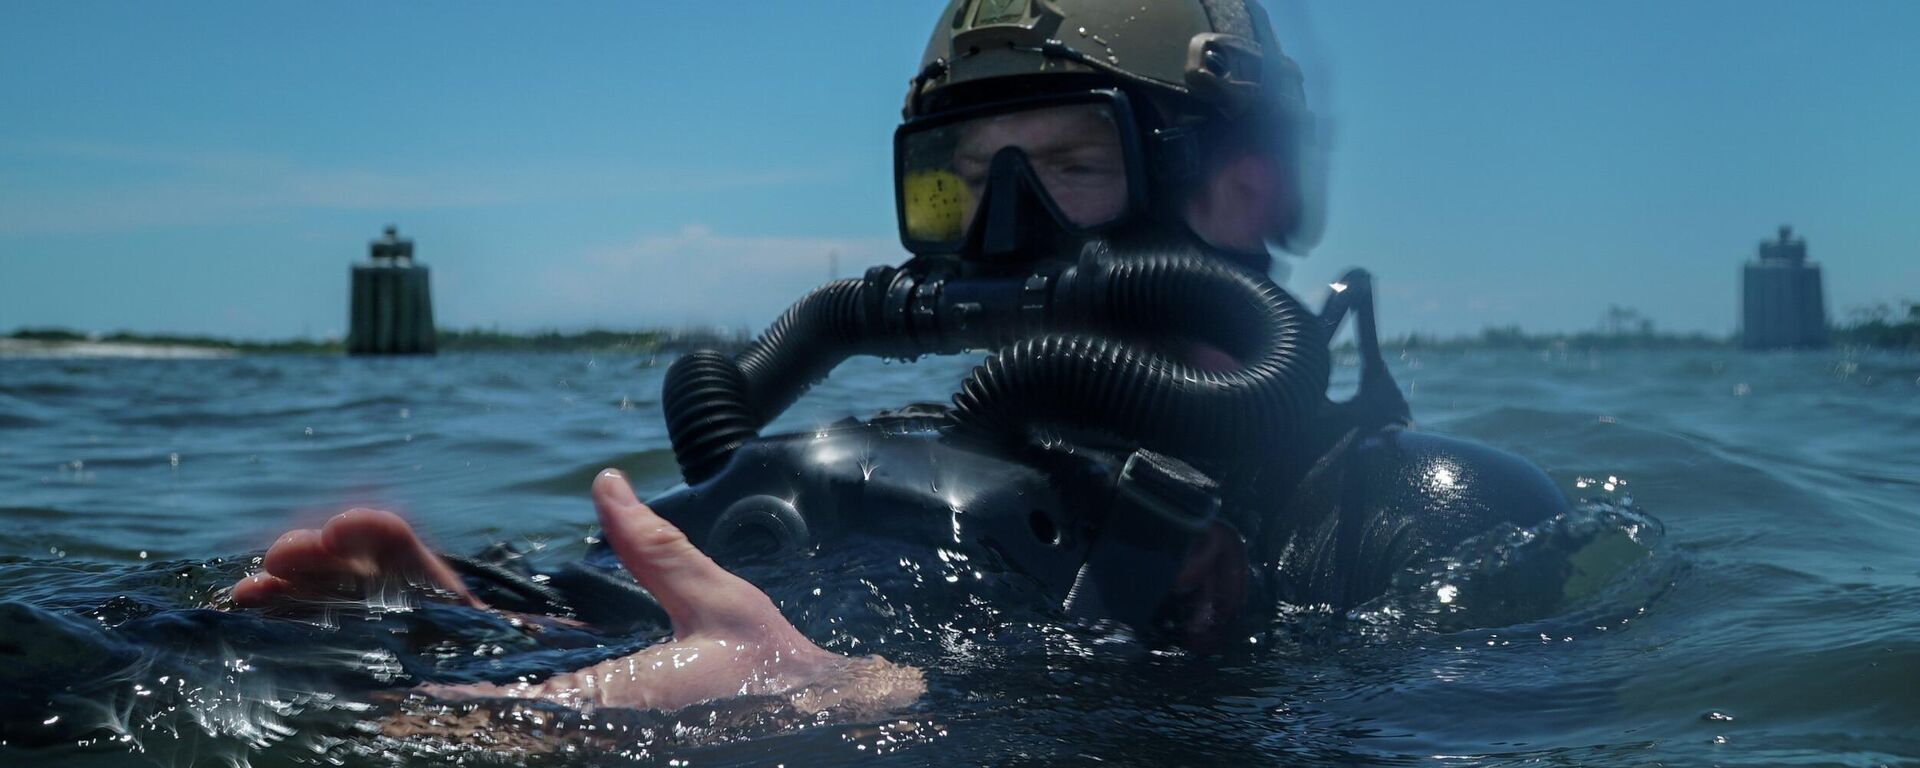 US Navy SEAL during drills, 2018 file photo. - Sputnik International, 1920, 02.10.2022